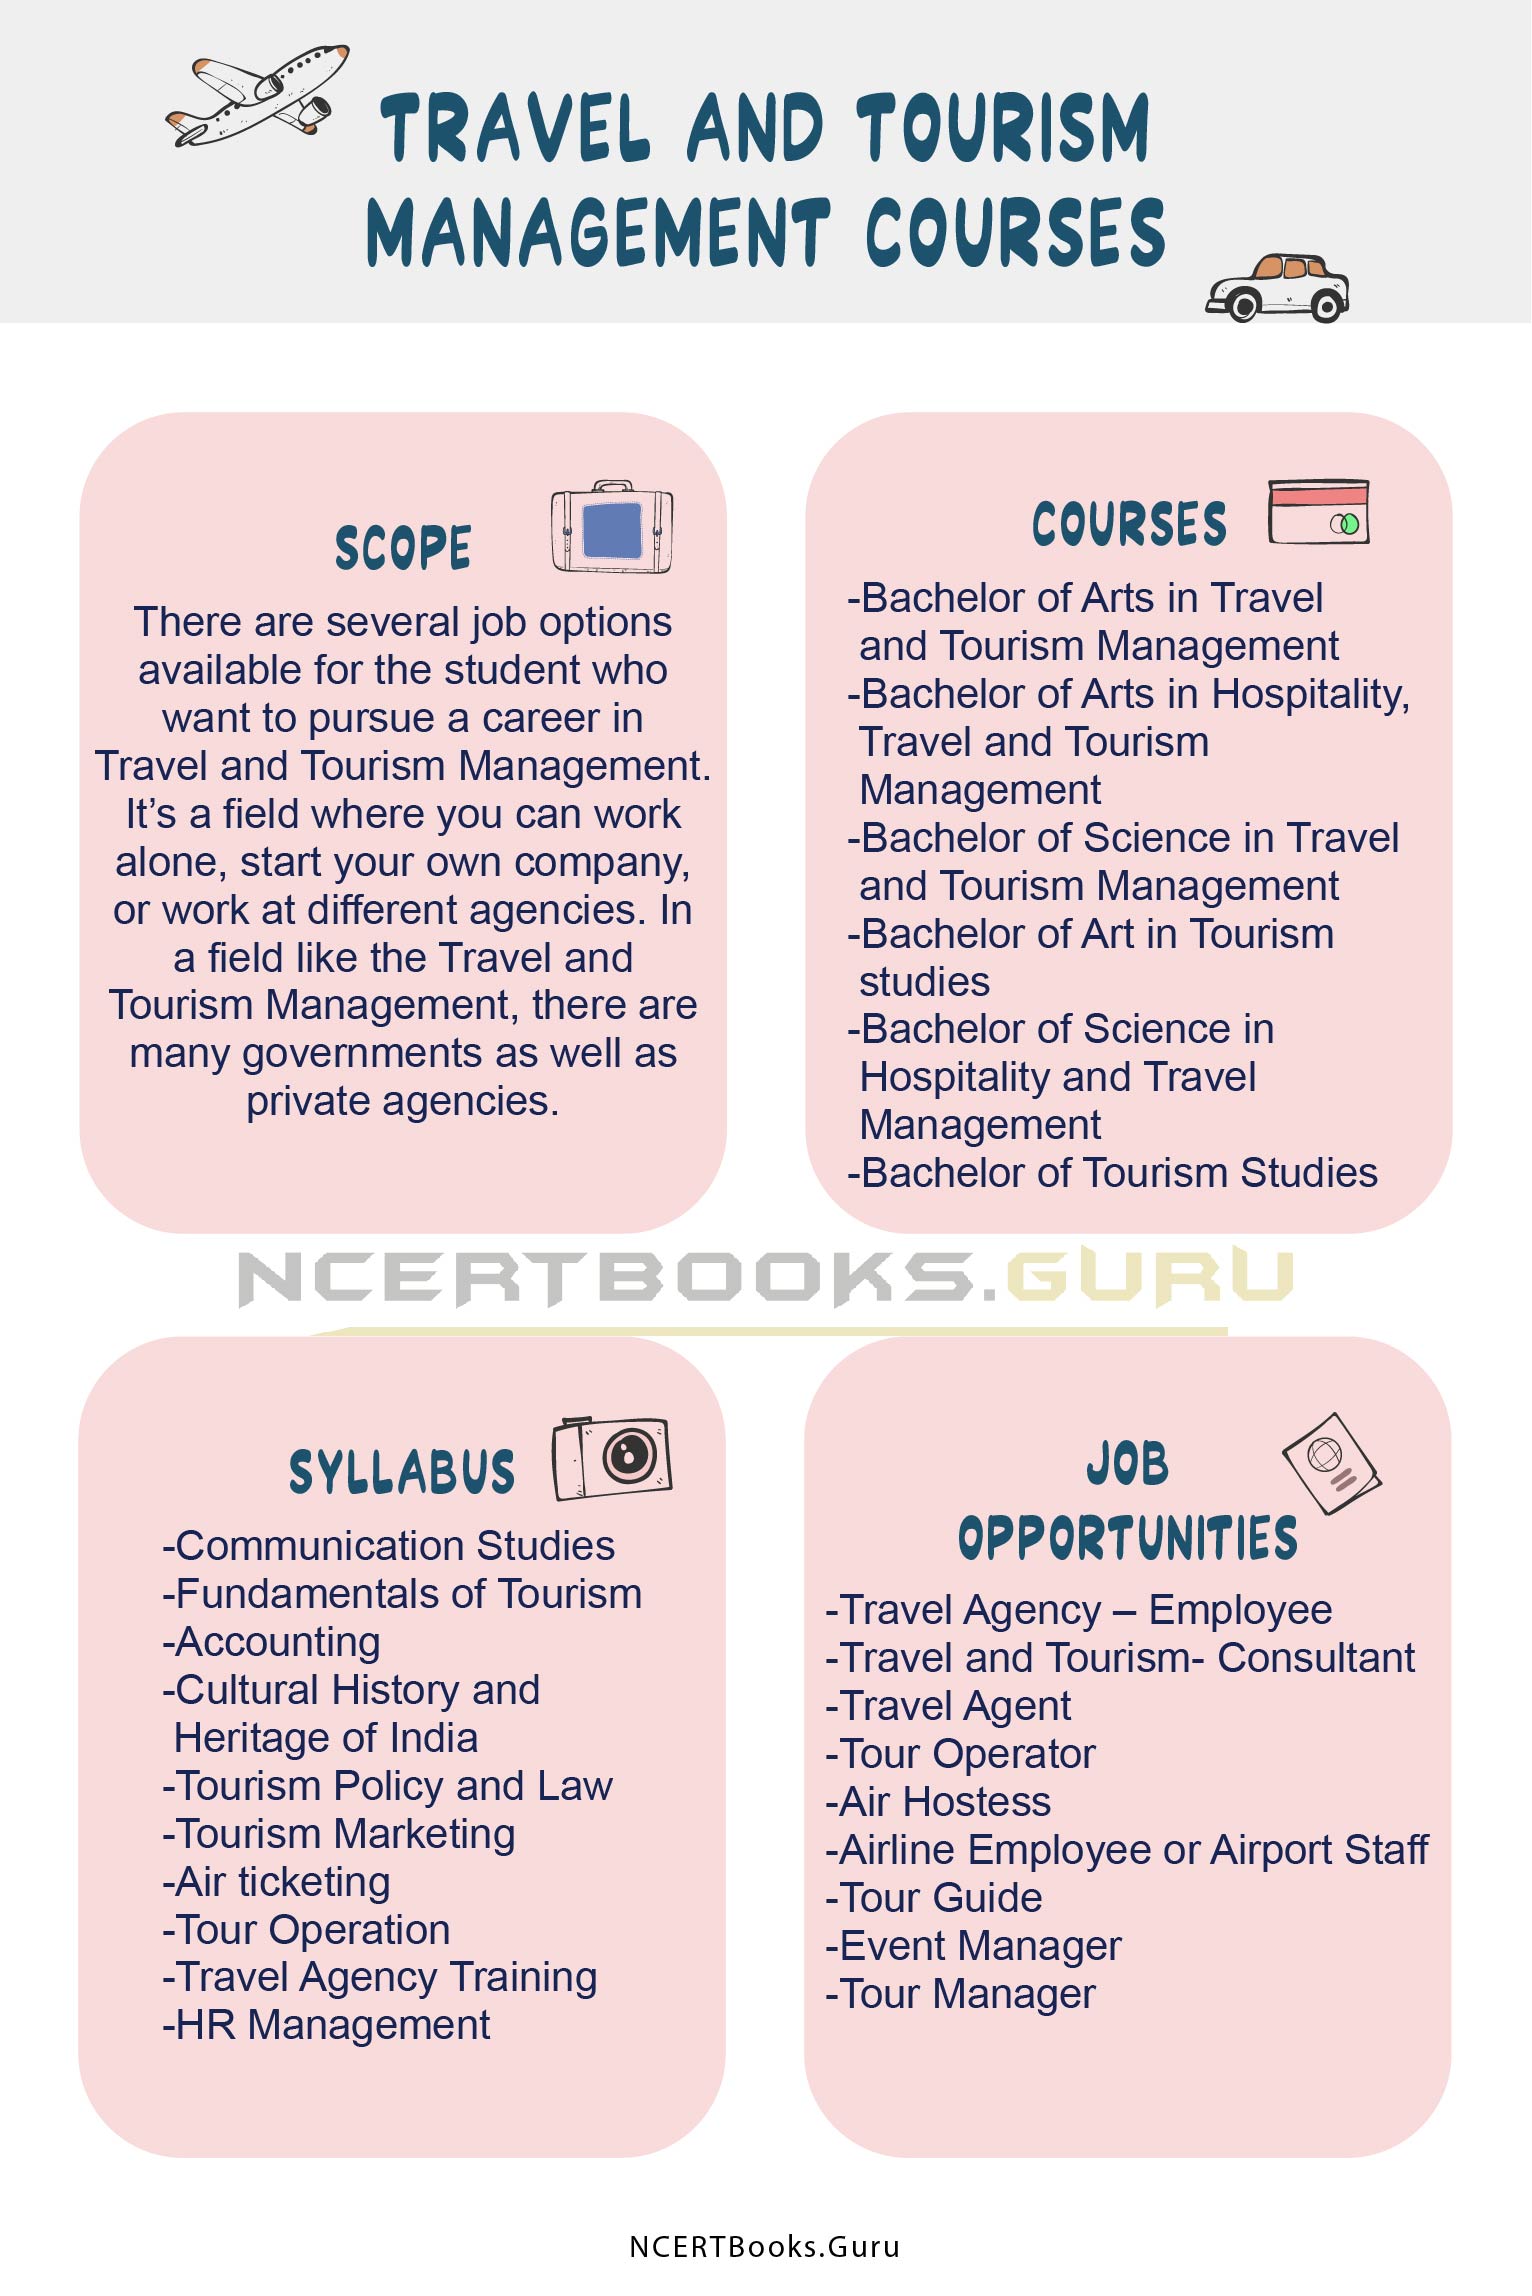 Travel and Tourism Management Courses